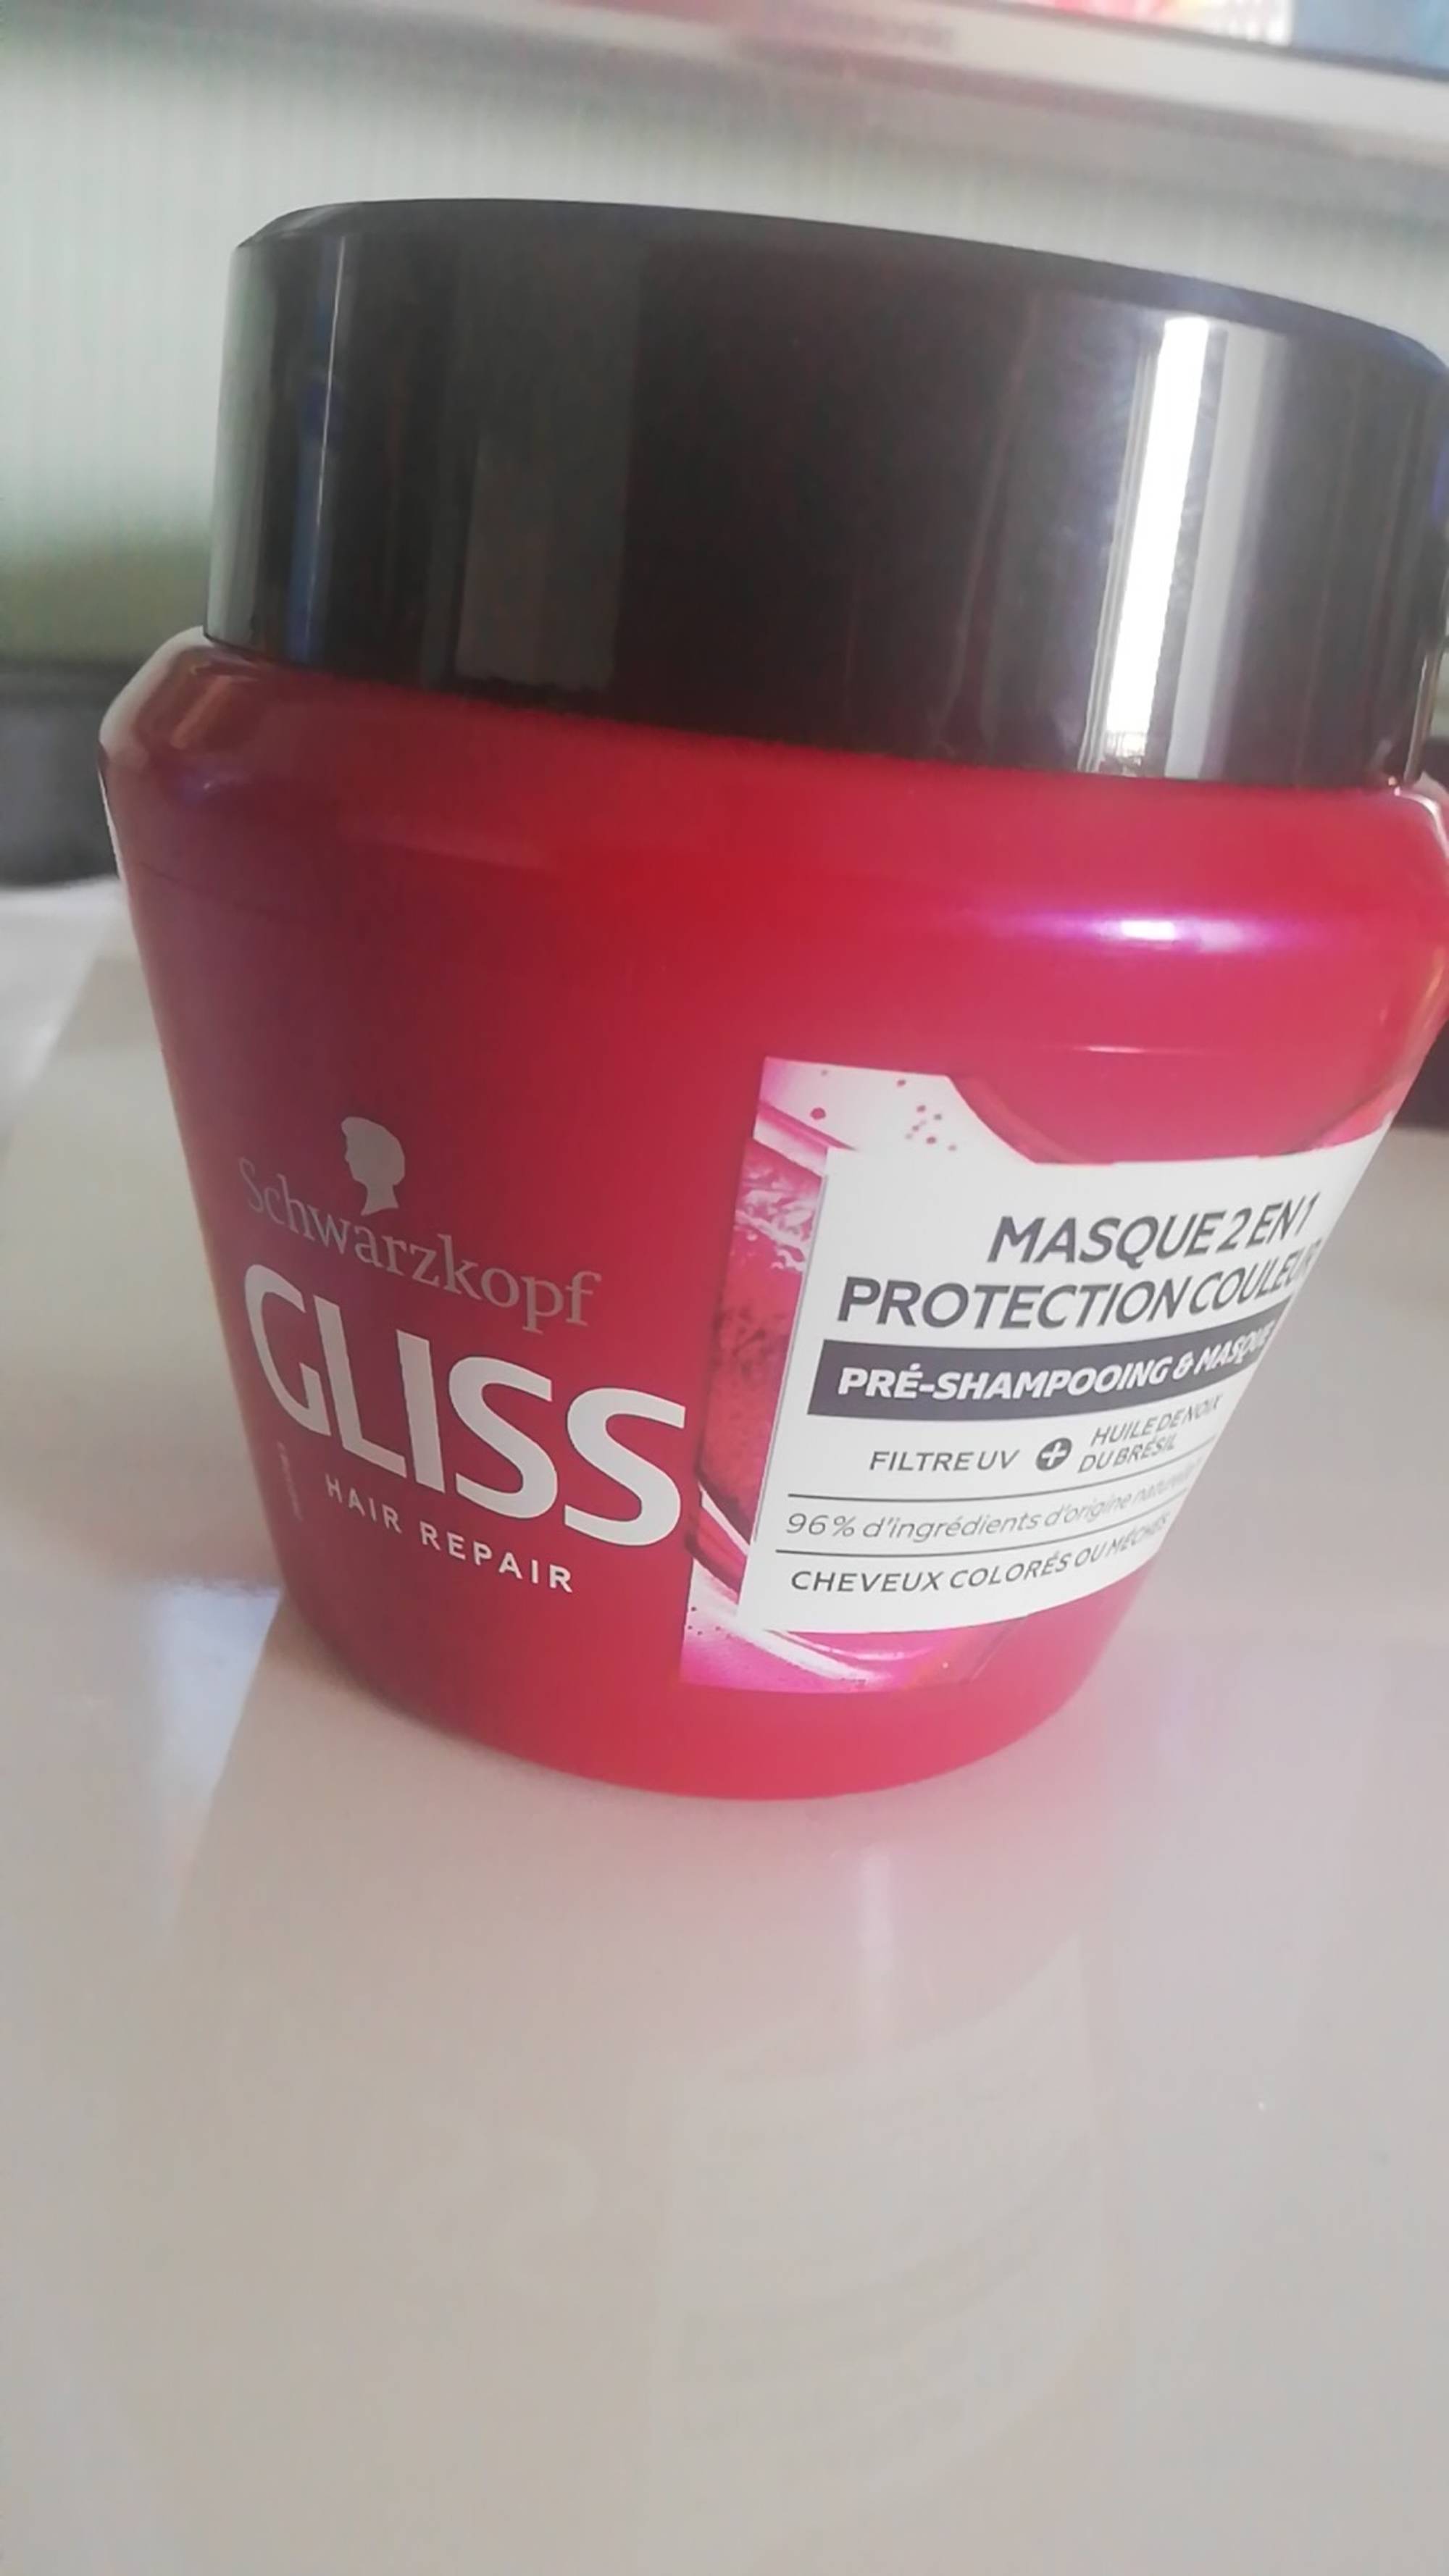 SCHWARZKOPF - Gliss hair repair - Masque 2 en 1 protection couleur